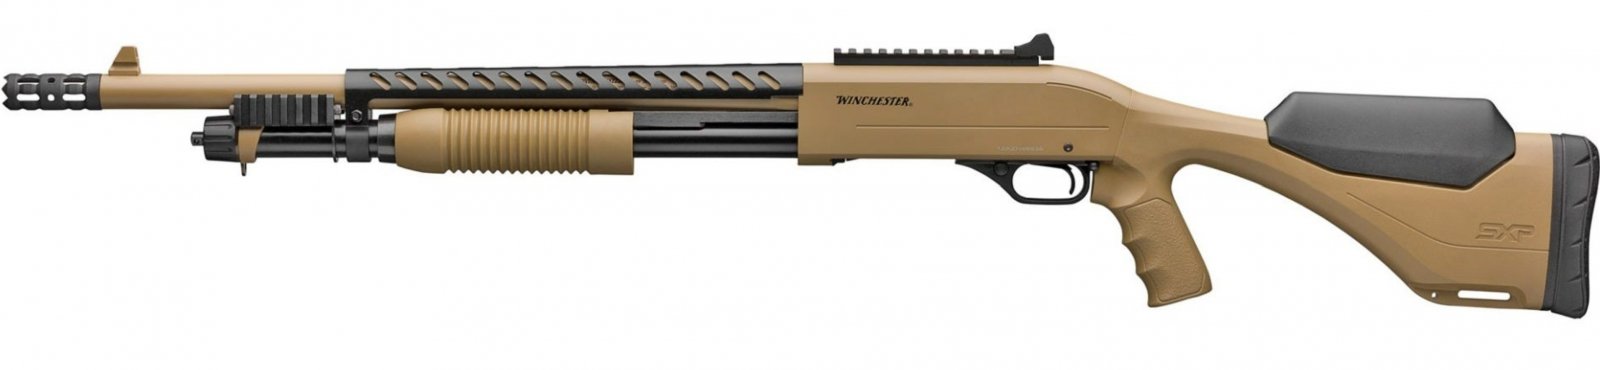 Winchester sxp defender fde with pistol grip b.jpg